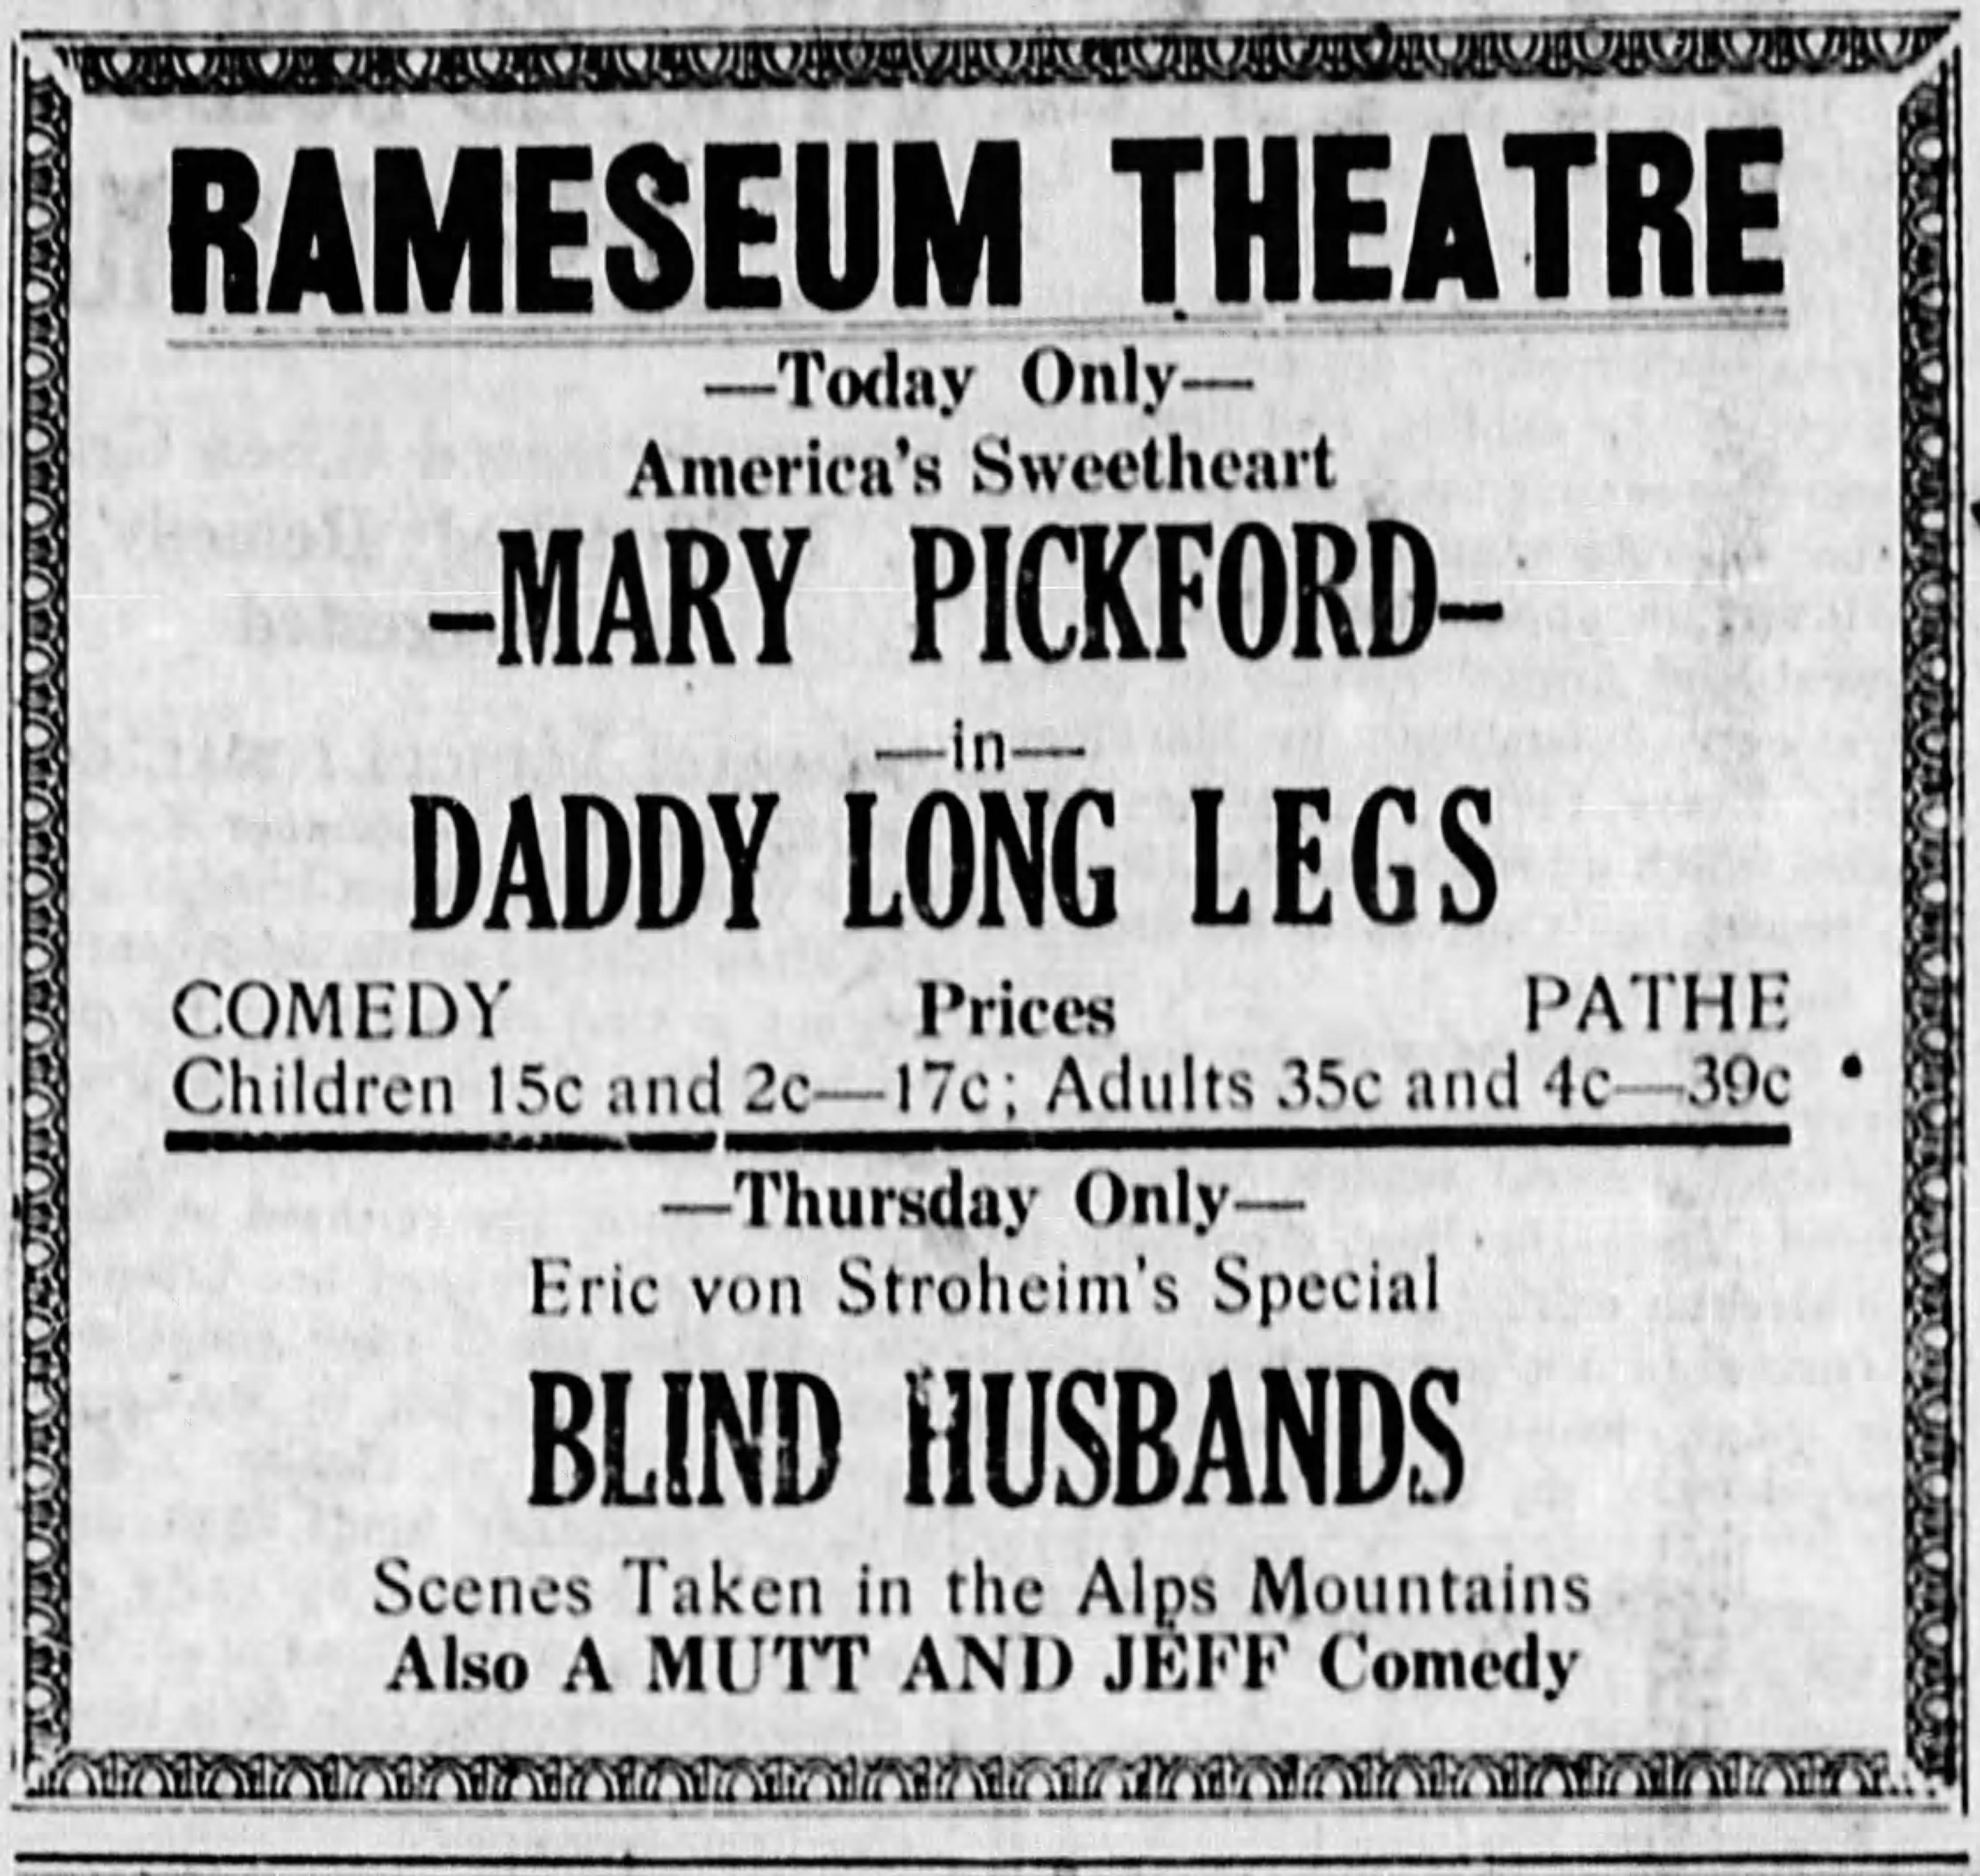 Rameseum theater ad, 1920